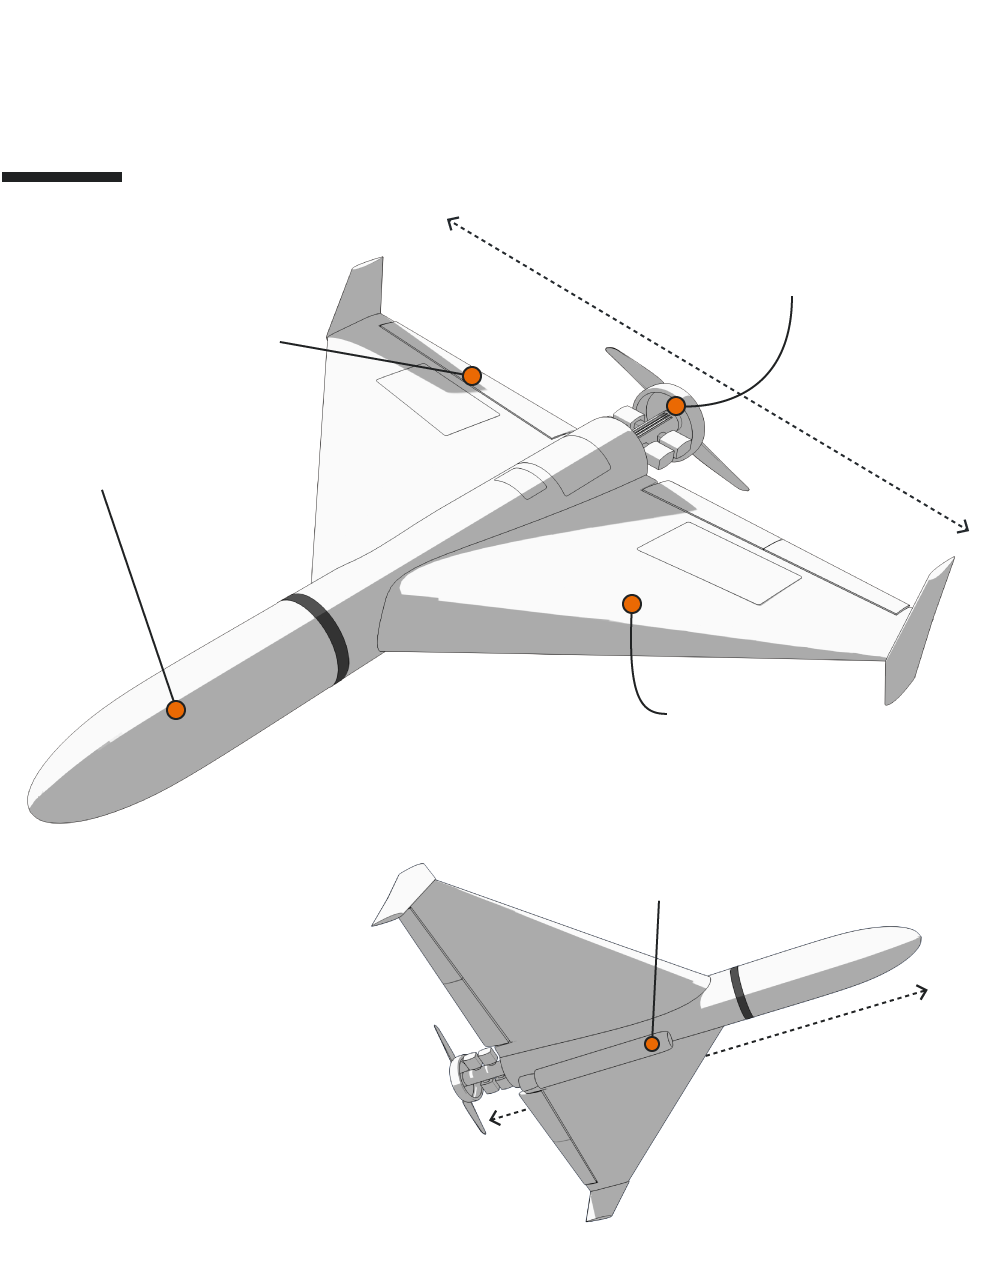 Shahed-136 Drone (“Geran-2”)